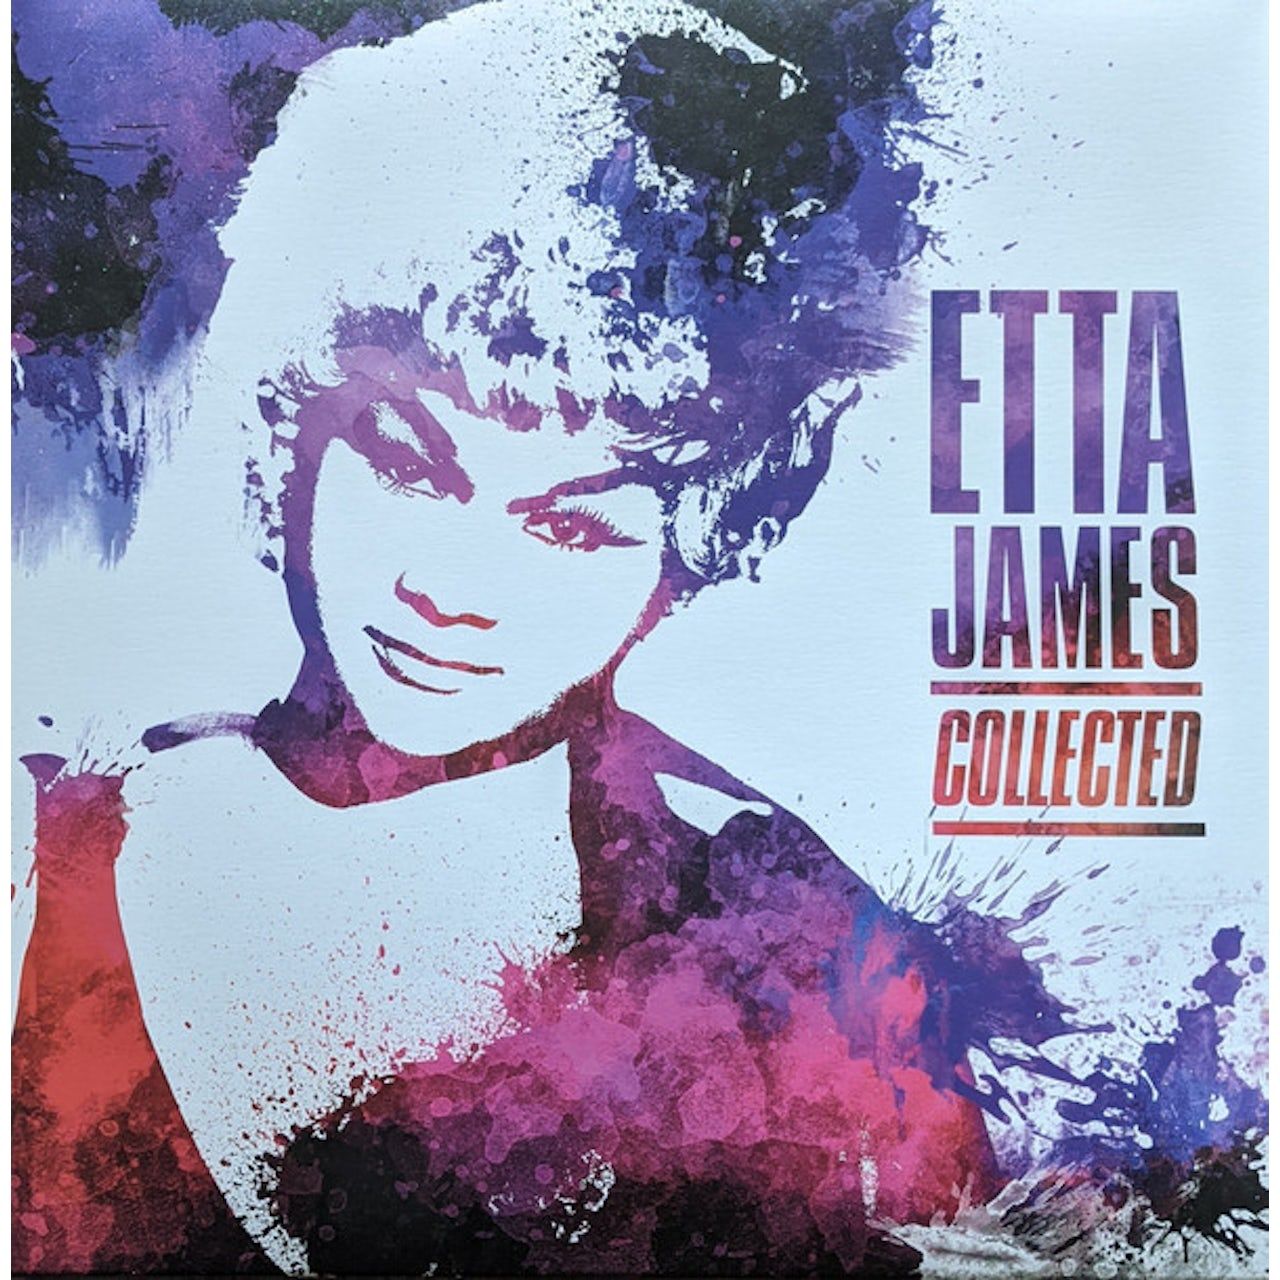 8719262017184, Виниловая пластинка James, Etta, Collected van vliet elma dad tell me a give